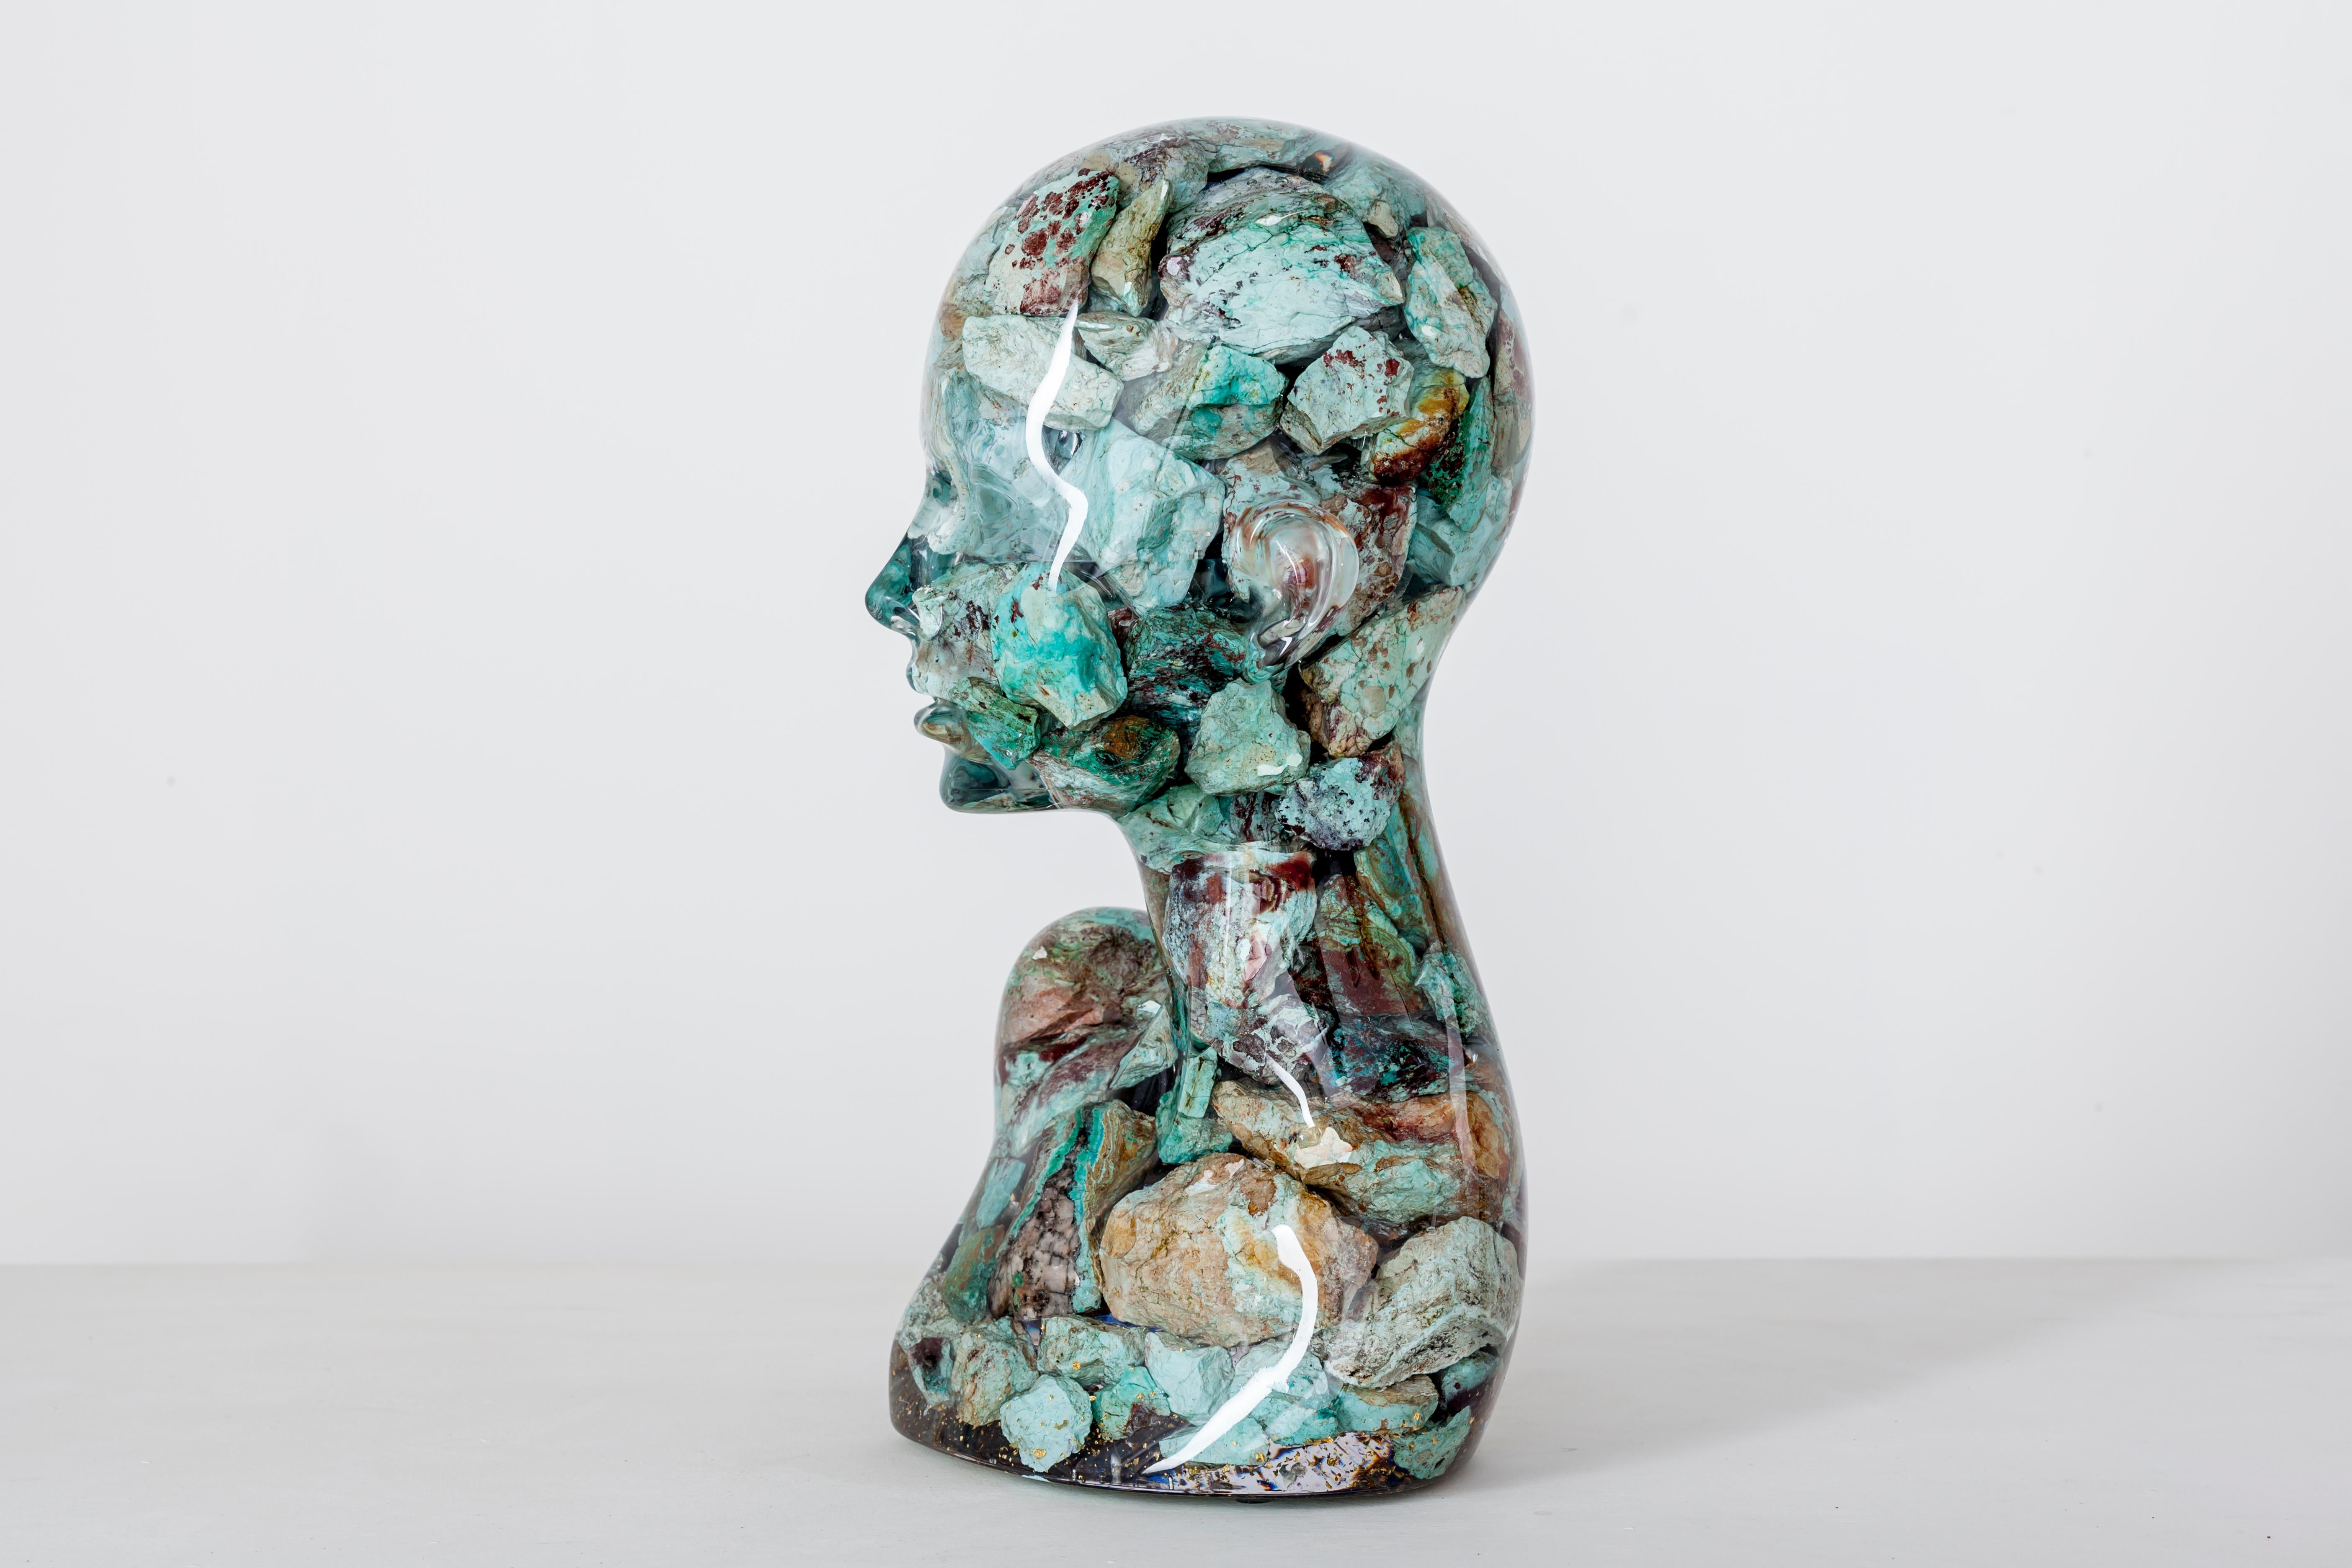 Estanatlehi - « La femme turquoise » - Sculpture de Guido Oakley